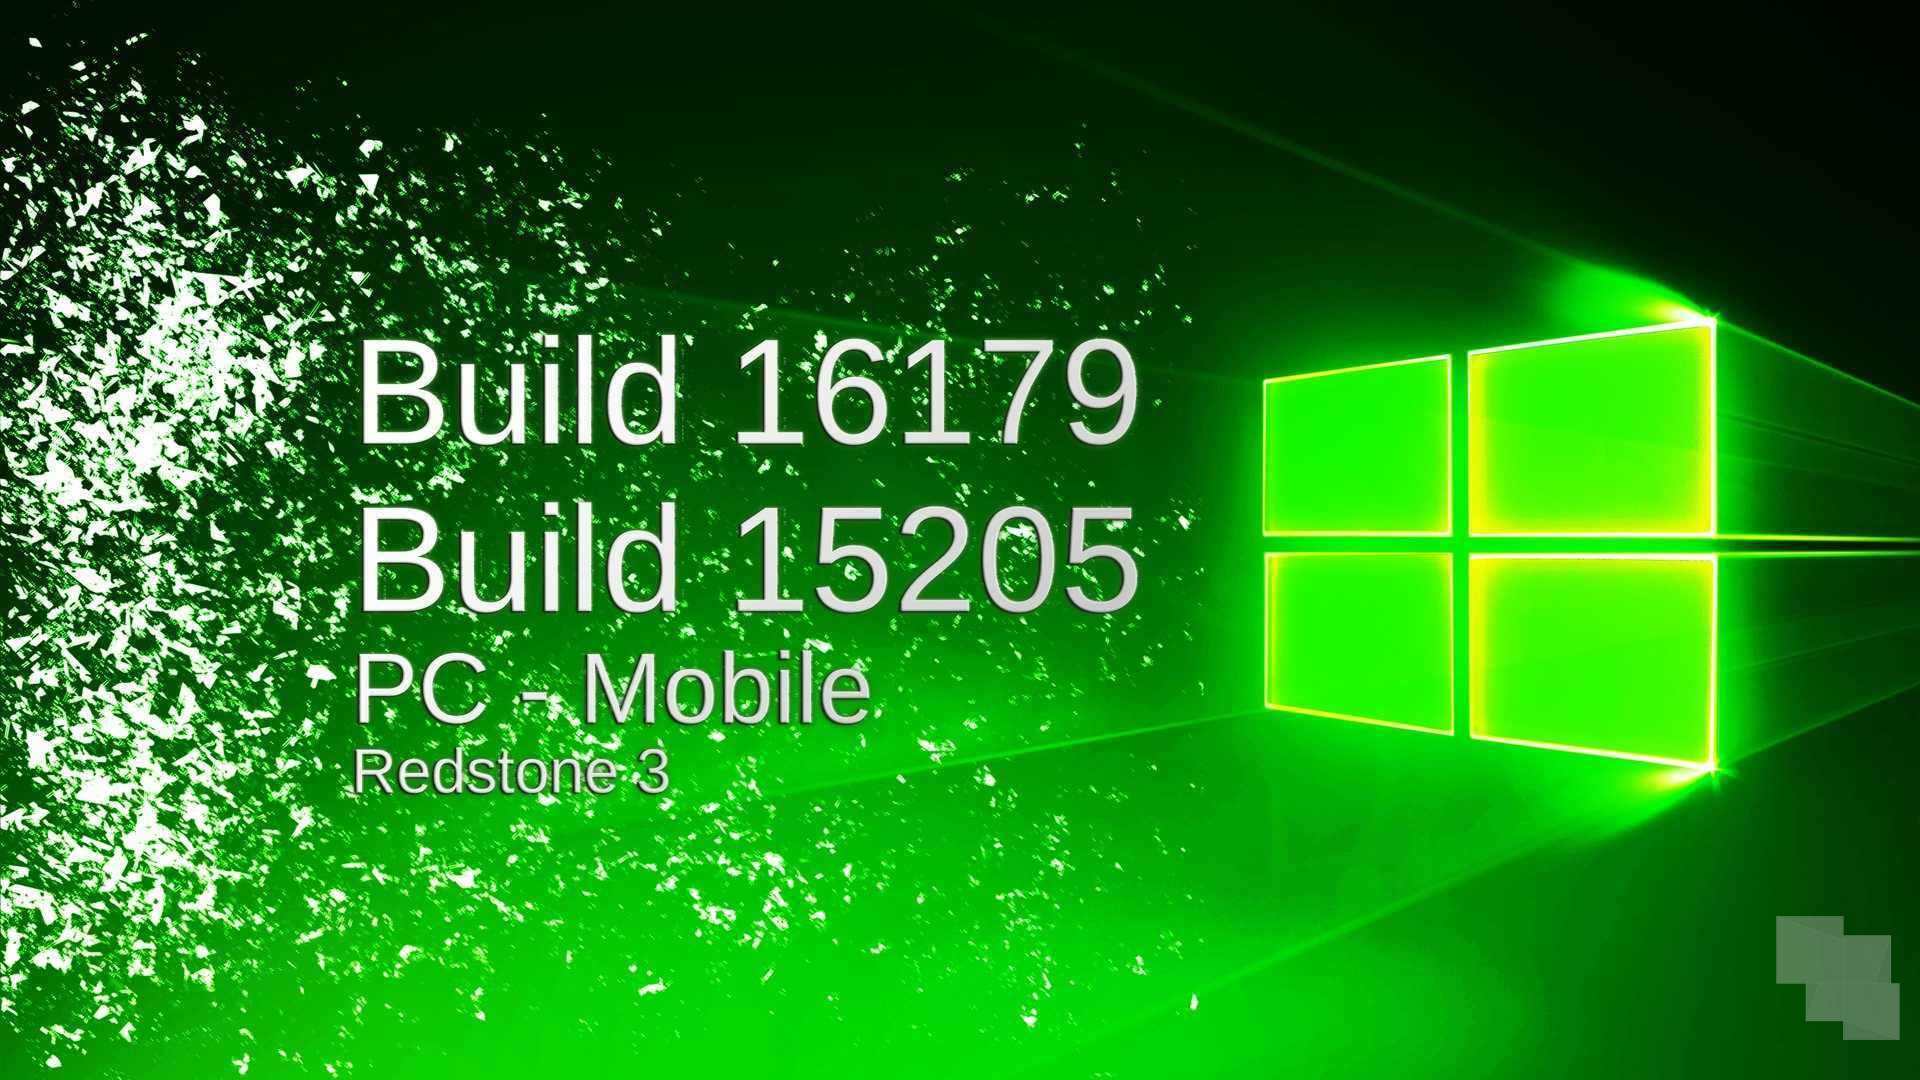 Builds 15205 - Build 16179 Windows 10 Windows 10 Mobile Redstone 3